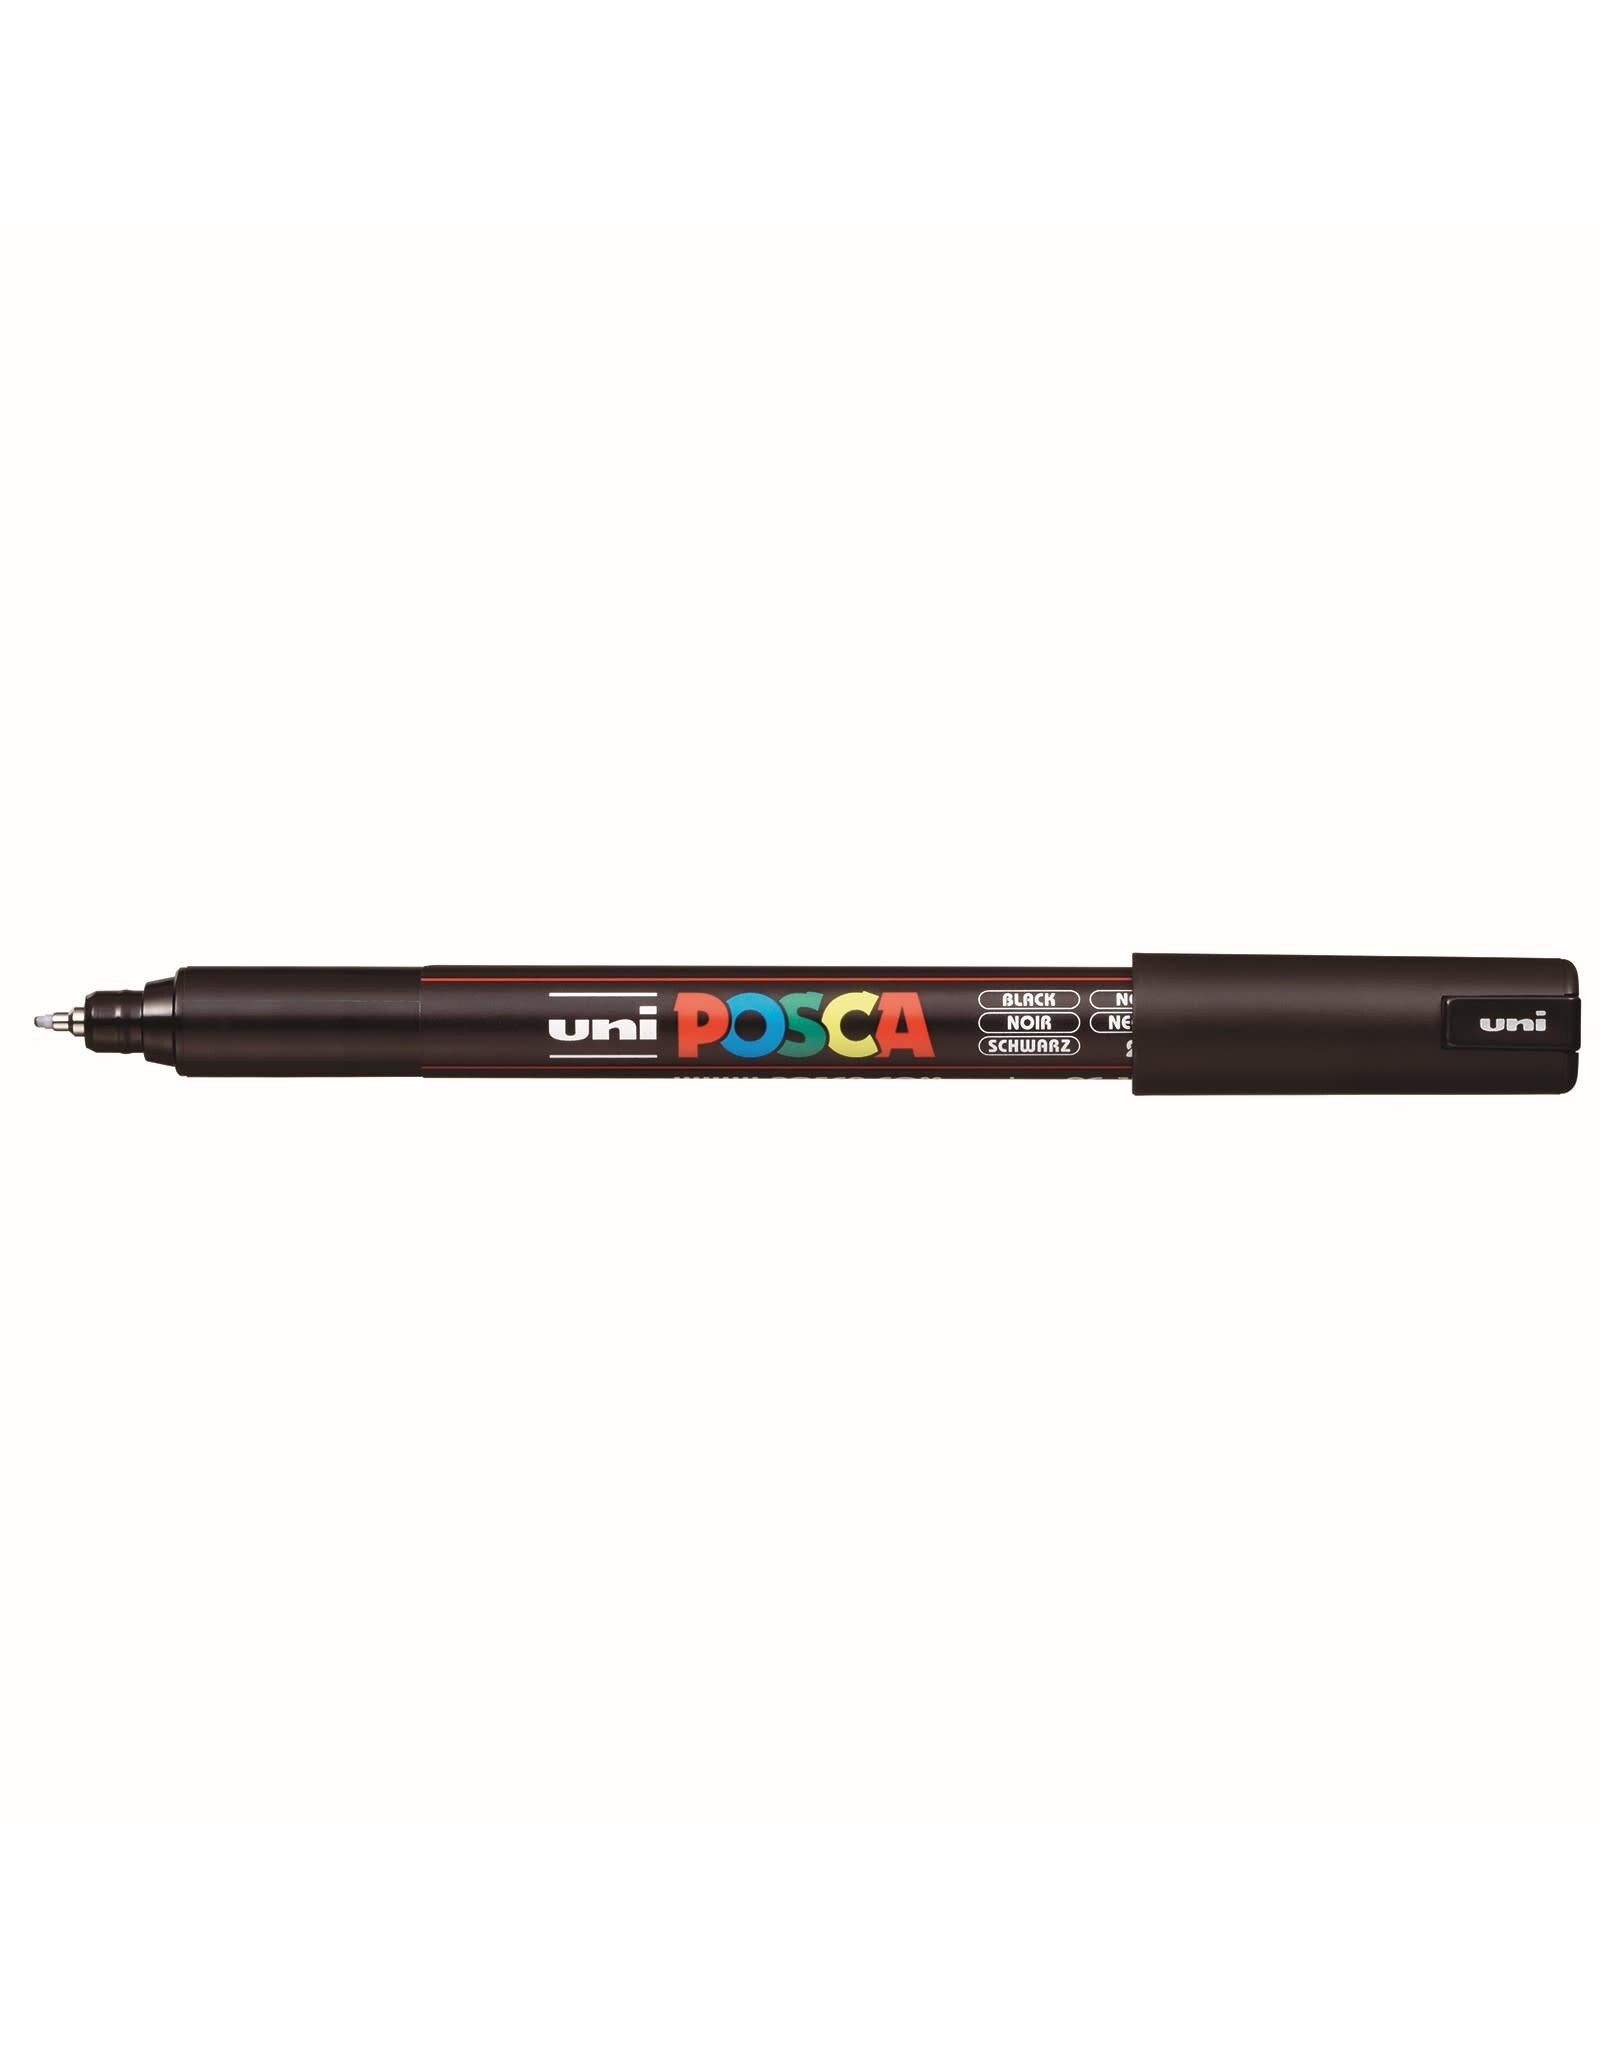 POSCA Uni POSCA Paint Marker, Extra Fine Metal Tip, Black